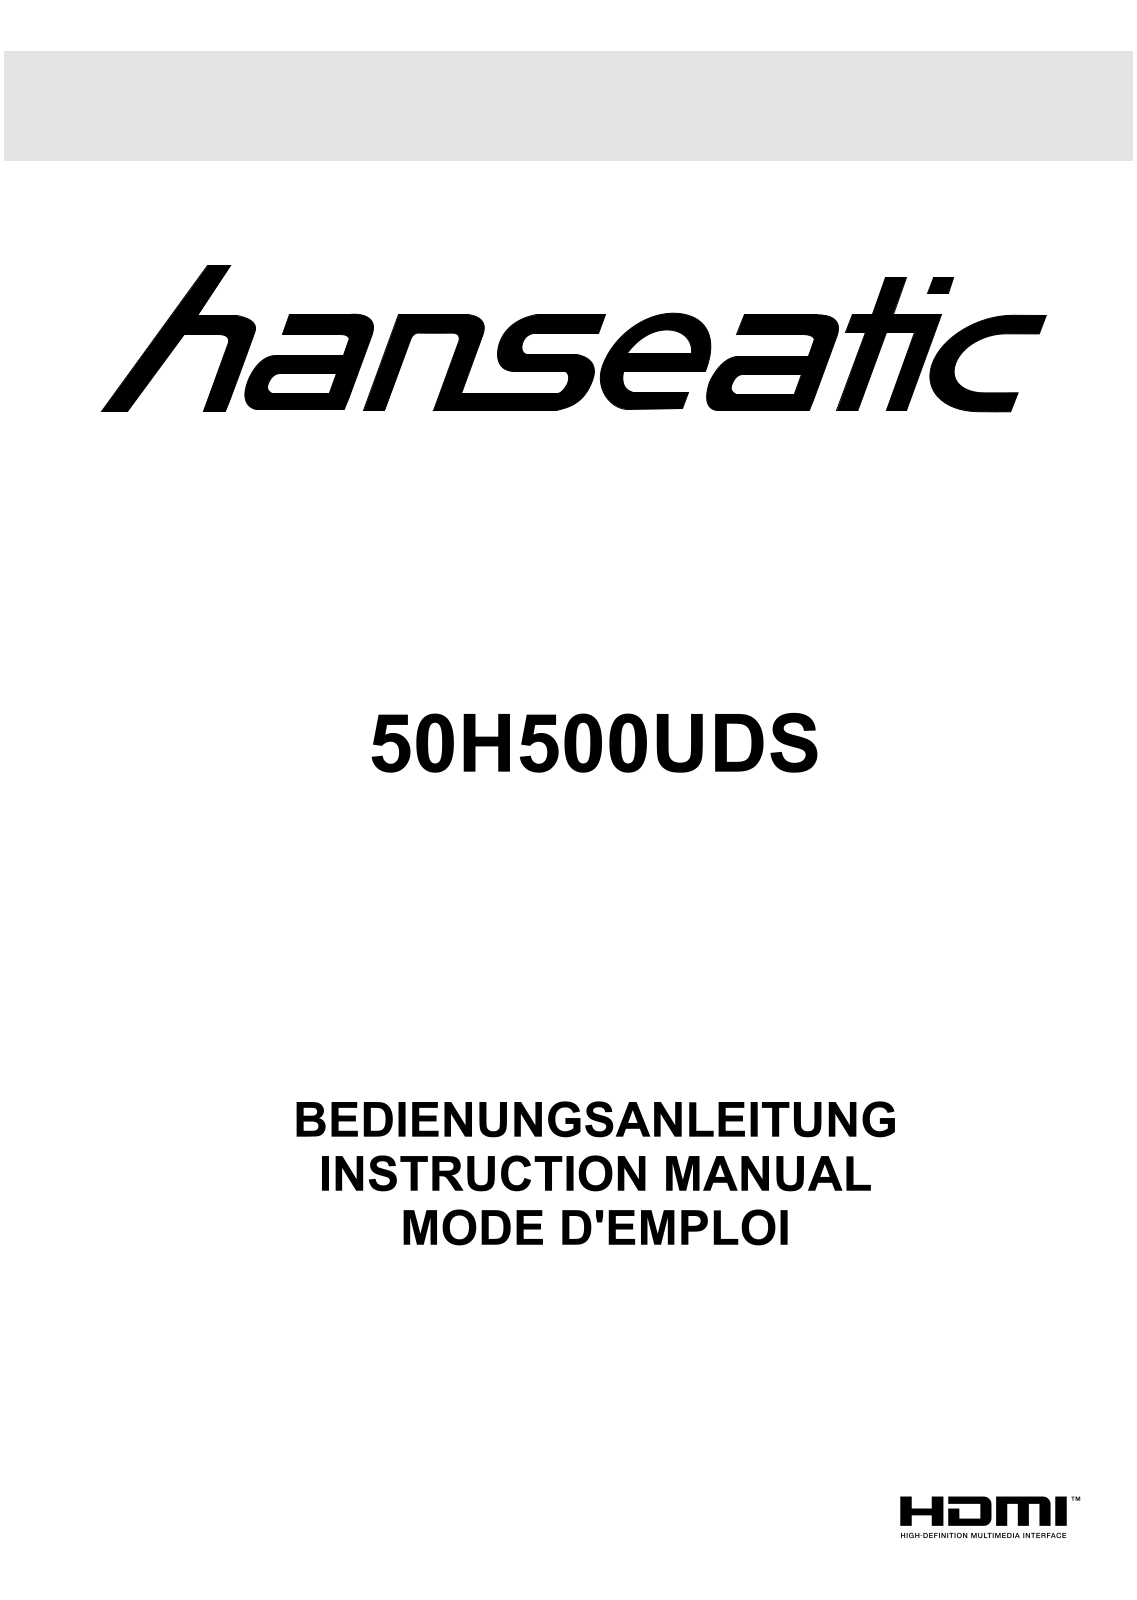 Hanseatic 50H500UDS operation manual